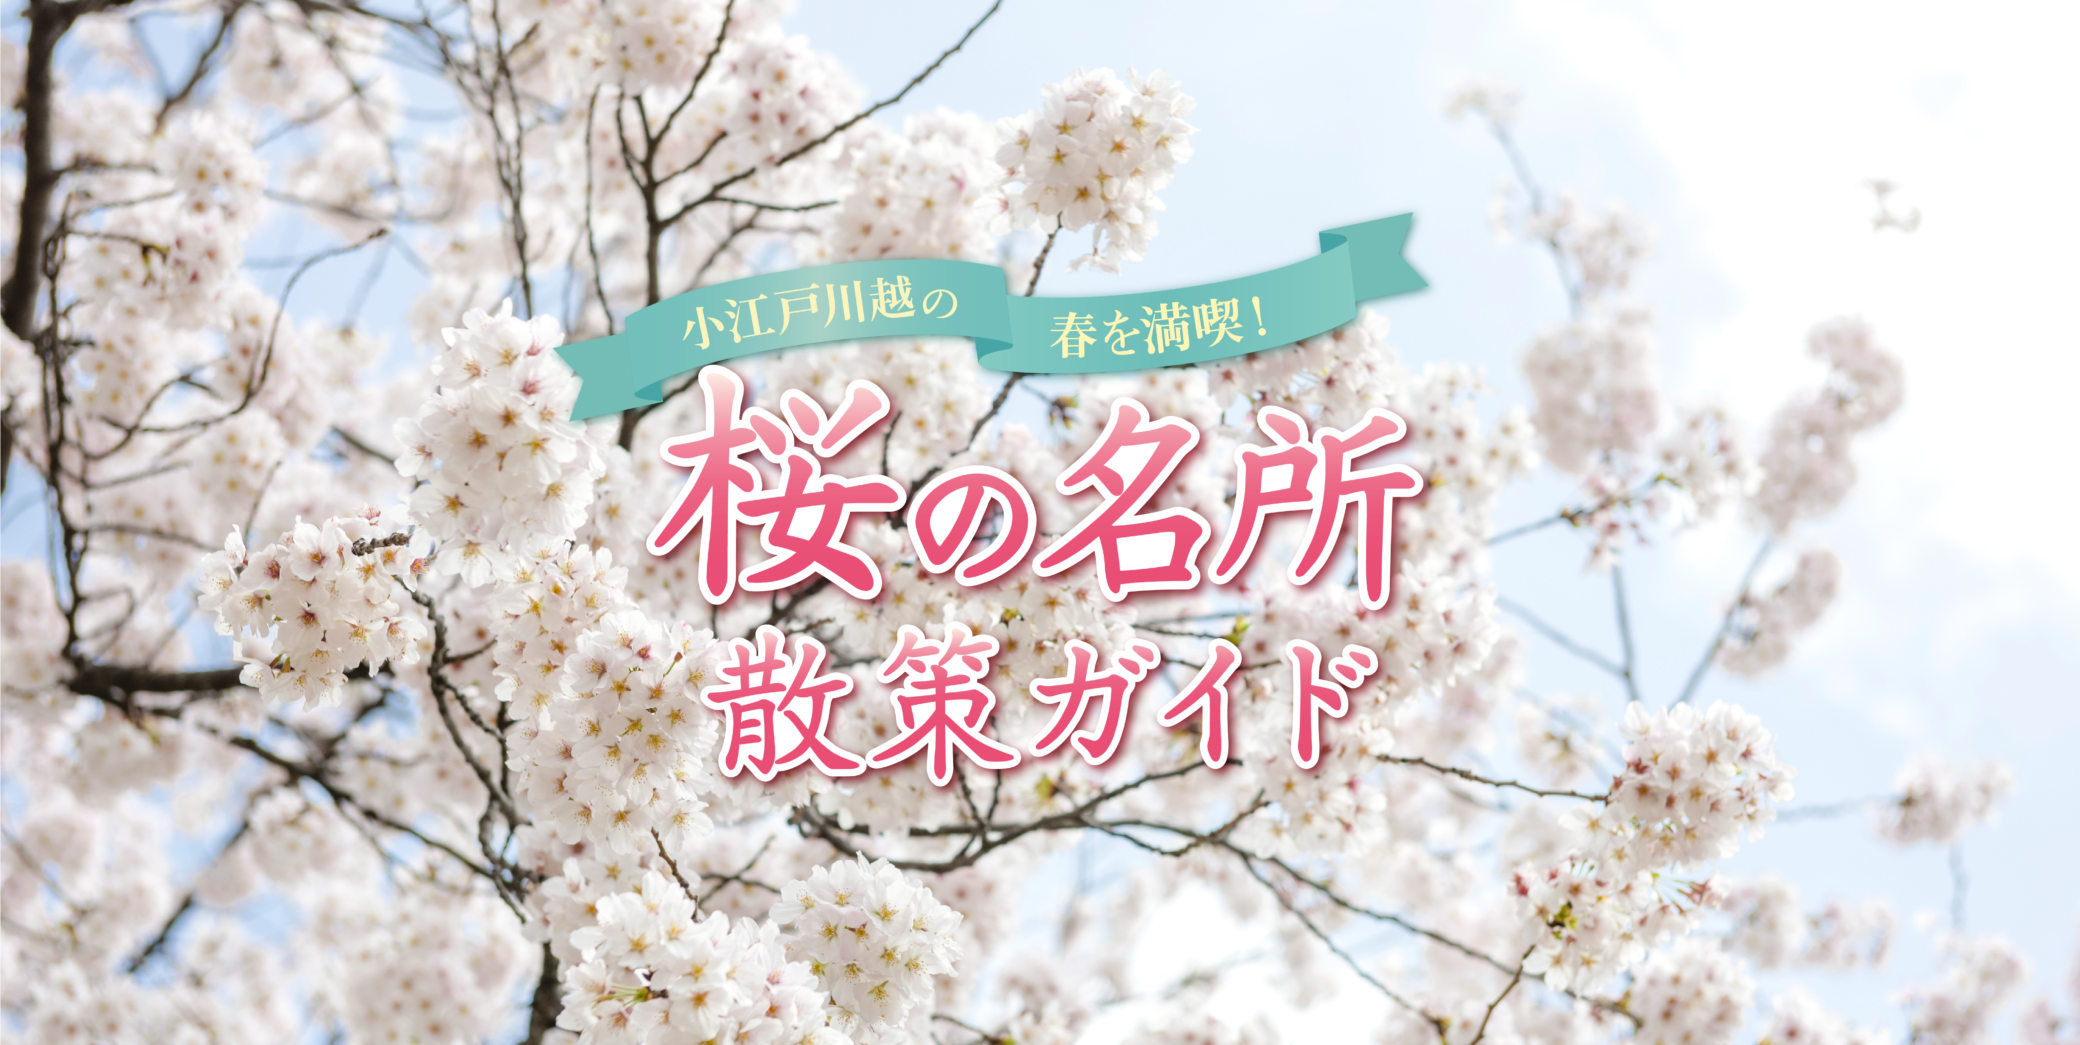 Enjoy spring in Koedo Kawagoe!Cherry Blossom Viewing Guide